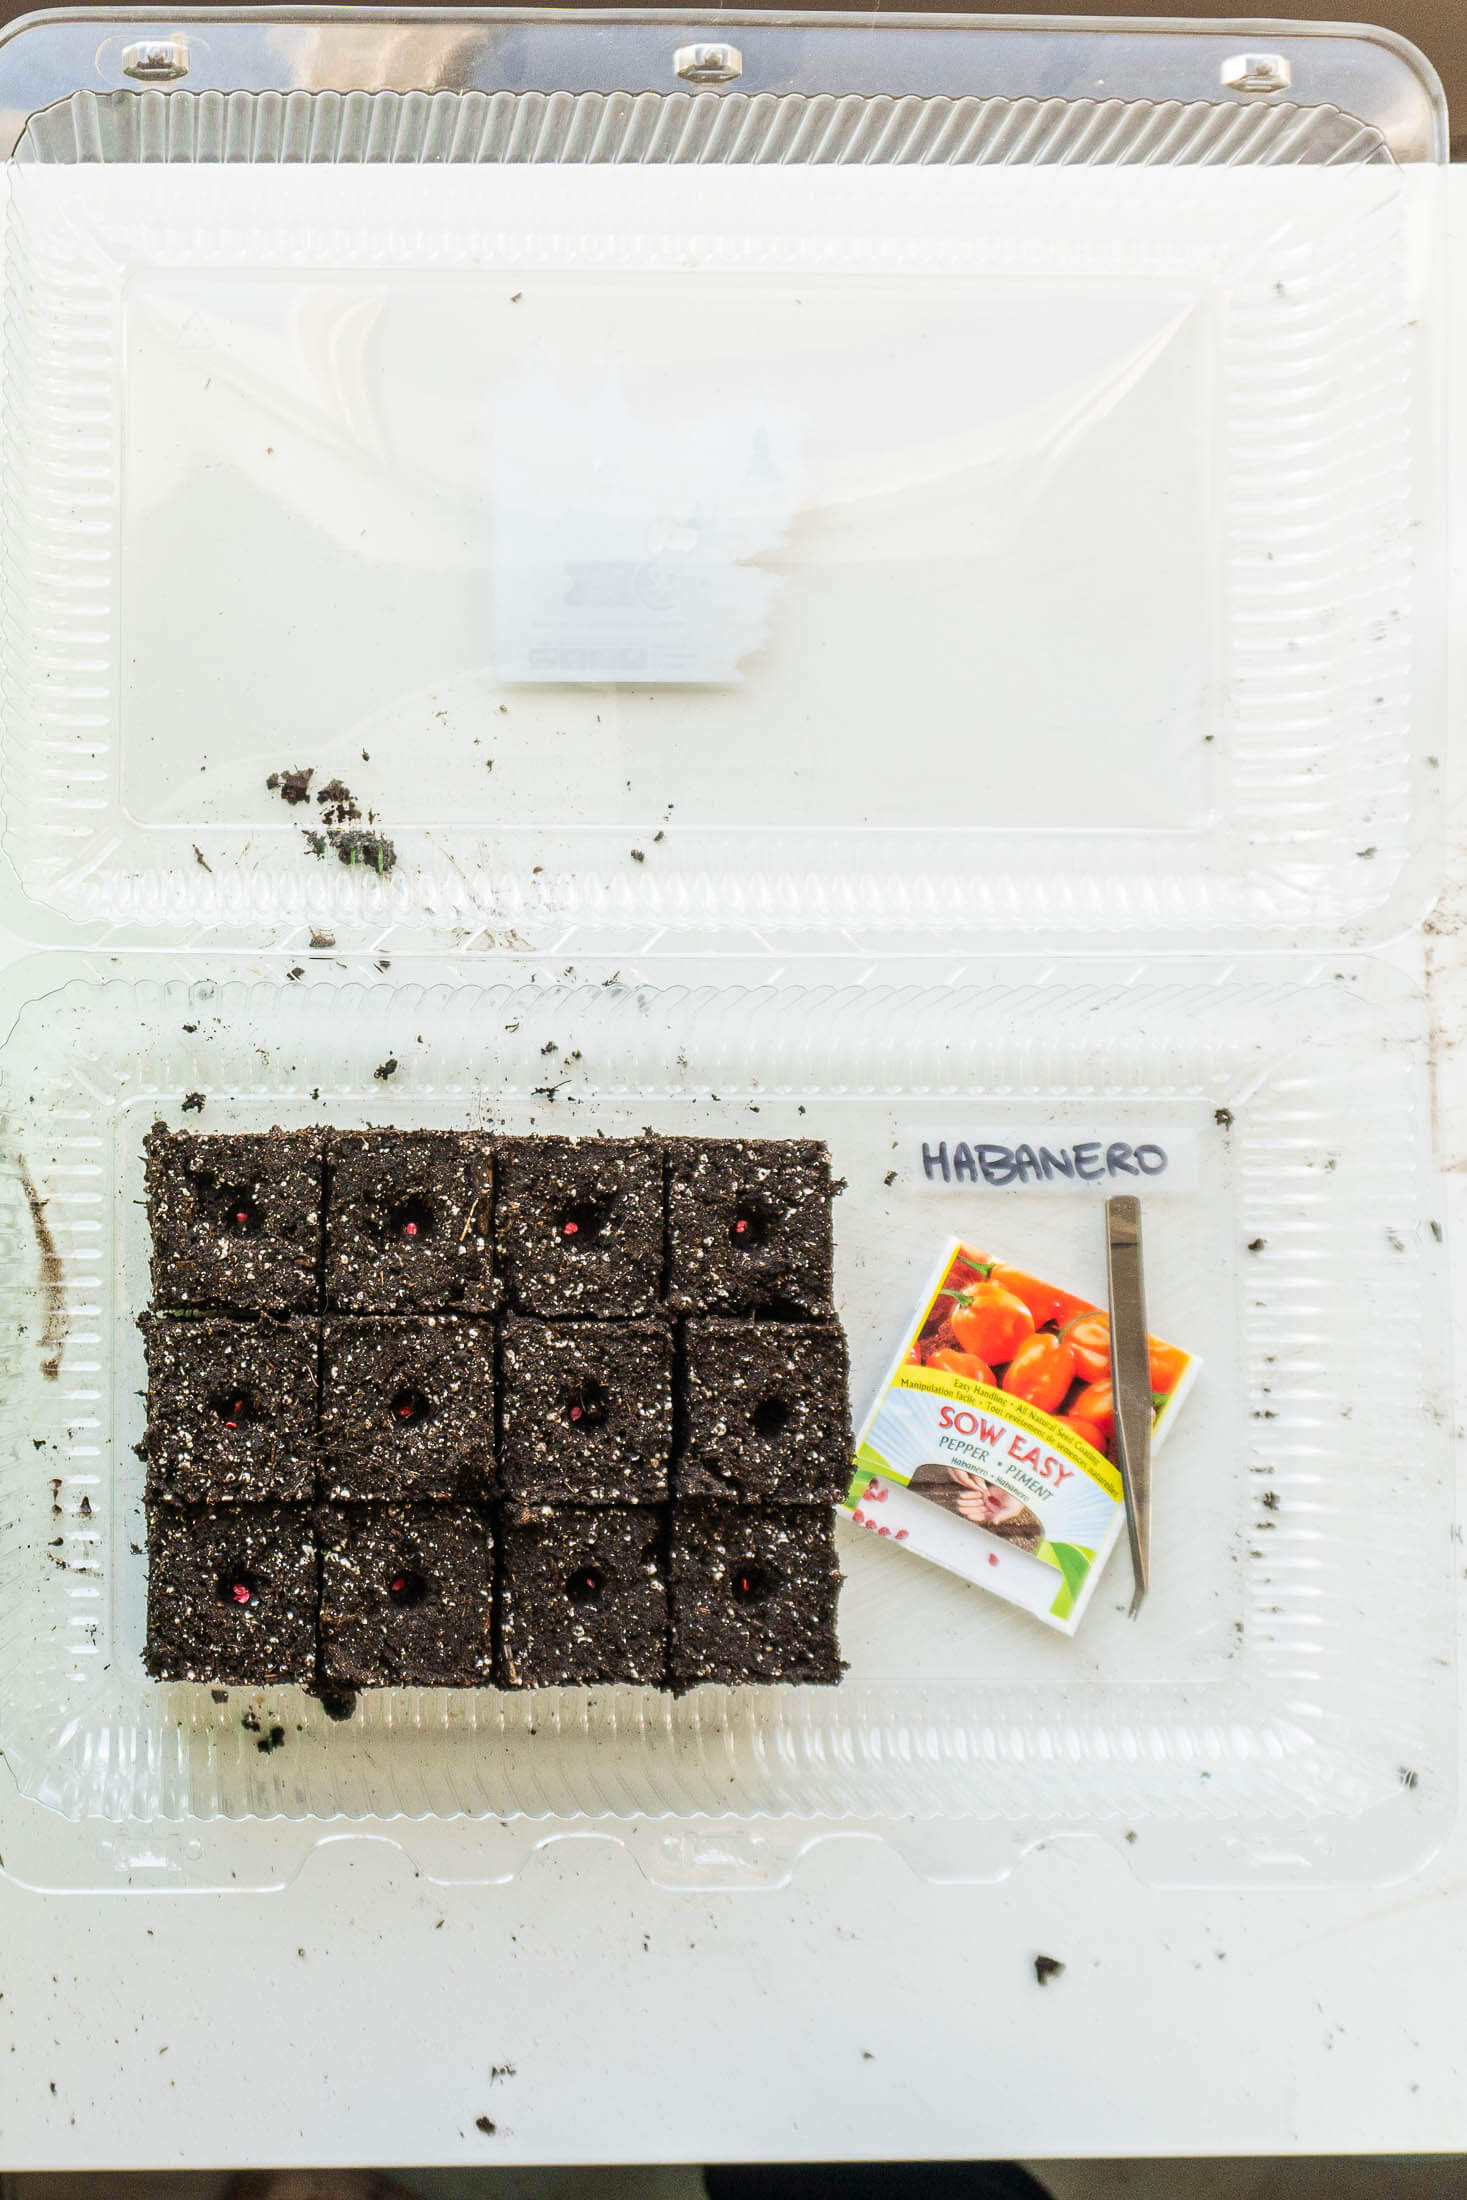 Seeding soil blocks with habanero seeds.